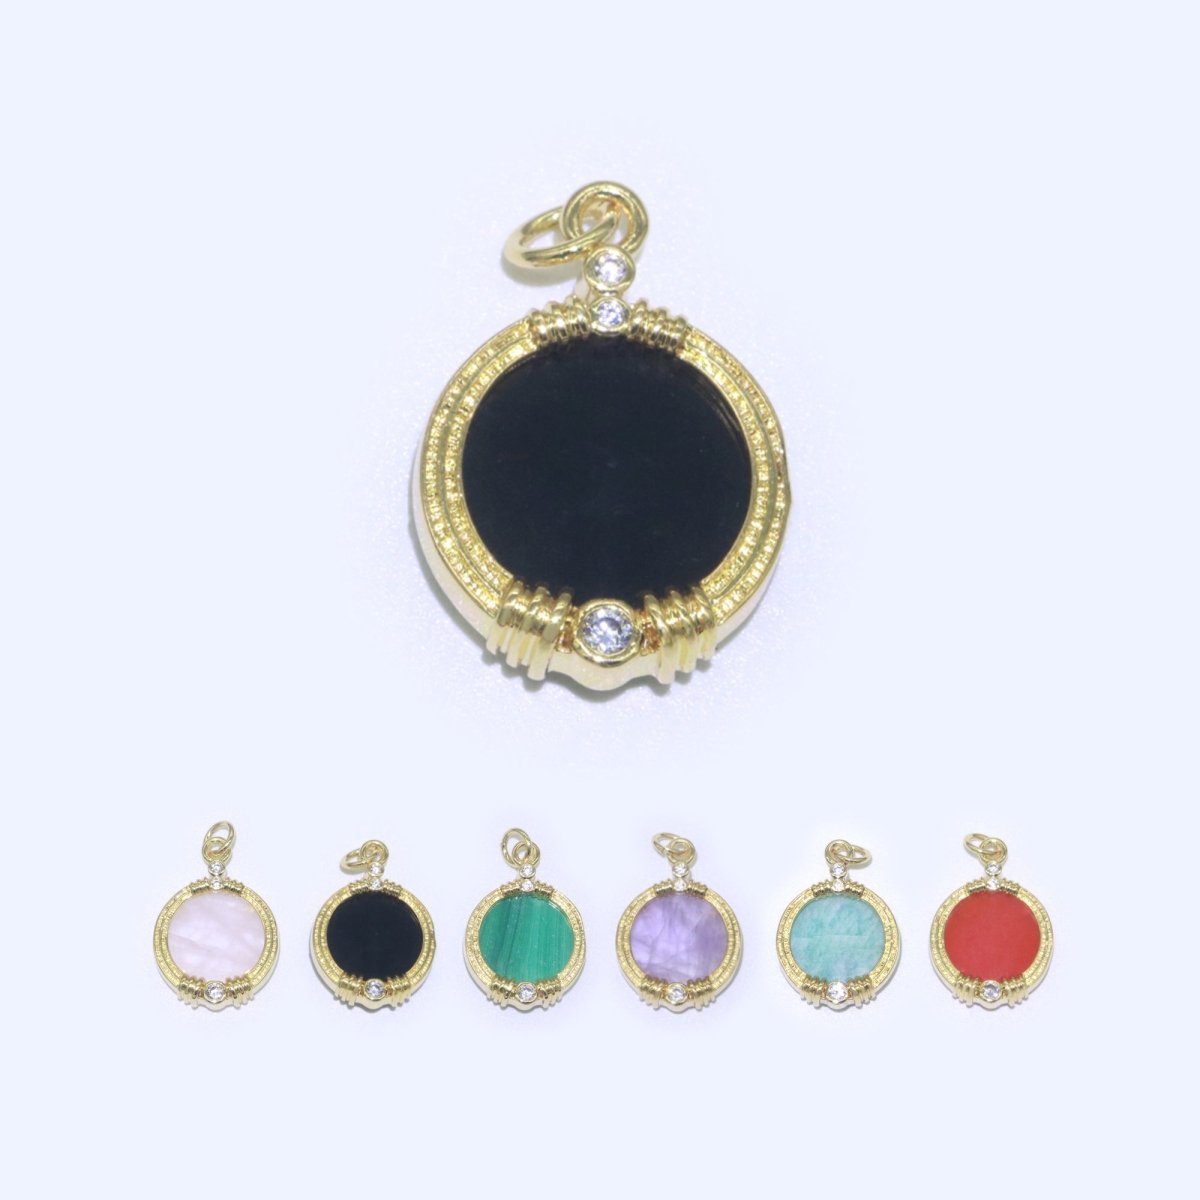 Natural Gemstone charms, 15.2mm Round Coin pendant, Gold Filled pendant Onyx, Malachite, Quartz, Amethyst, Amazonite, Rubi Previous Stone M-404 - M-409 - DLUXCA